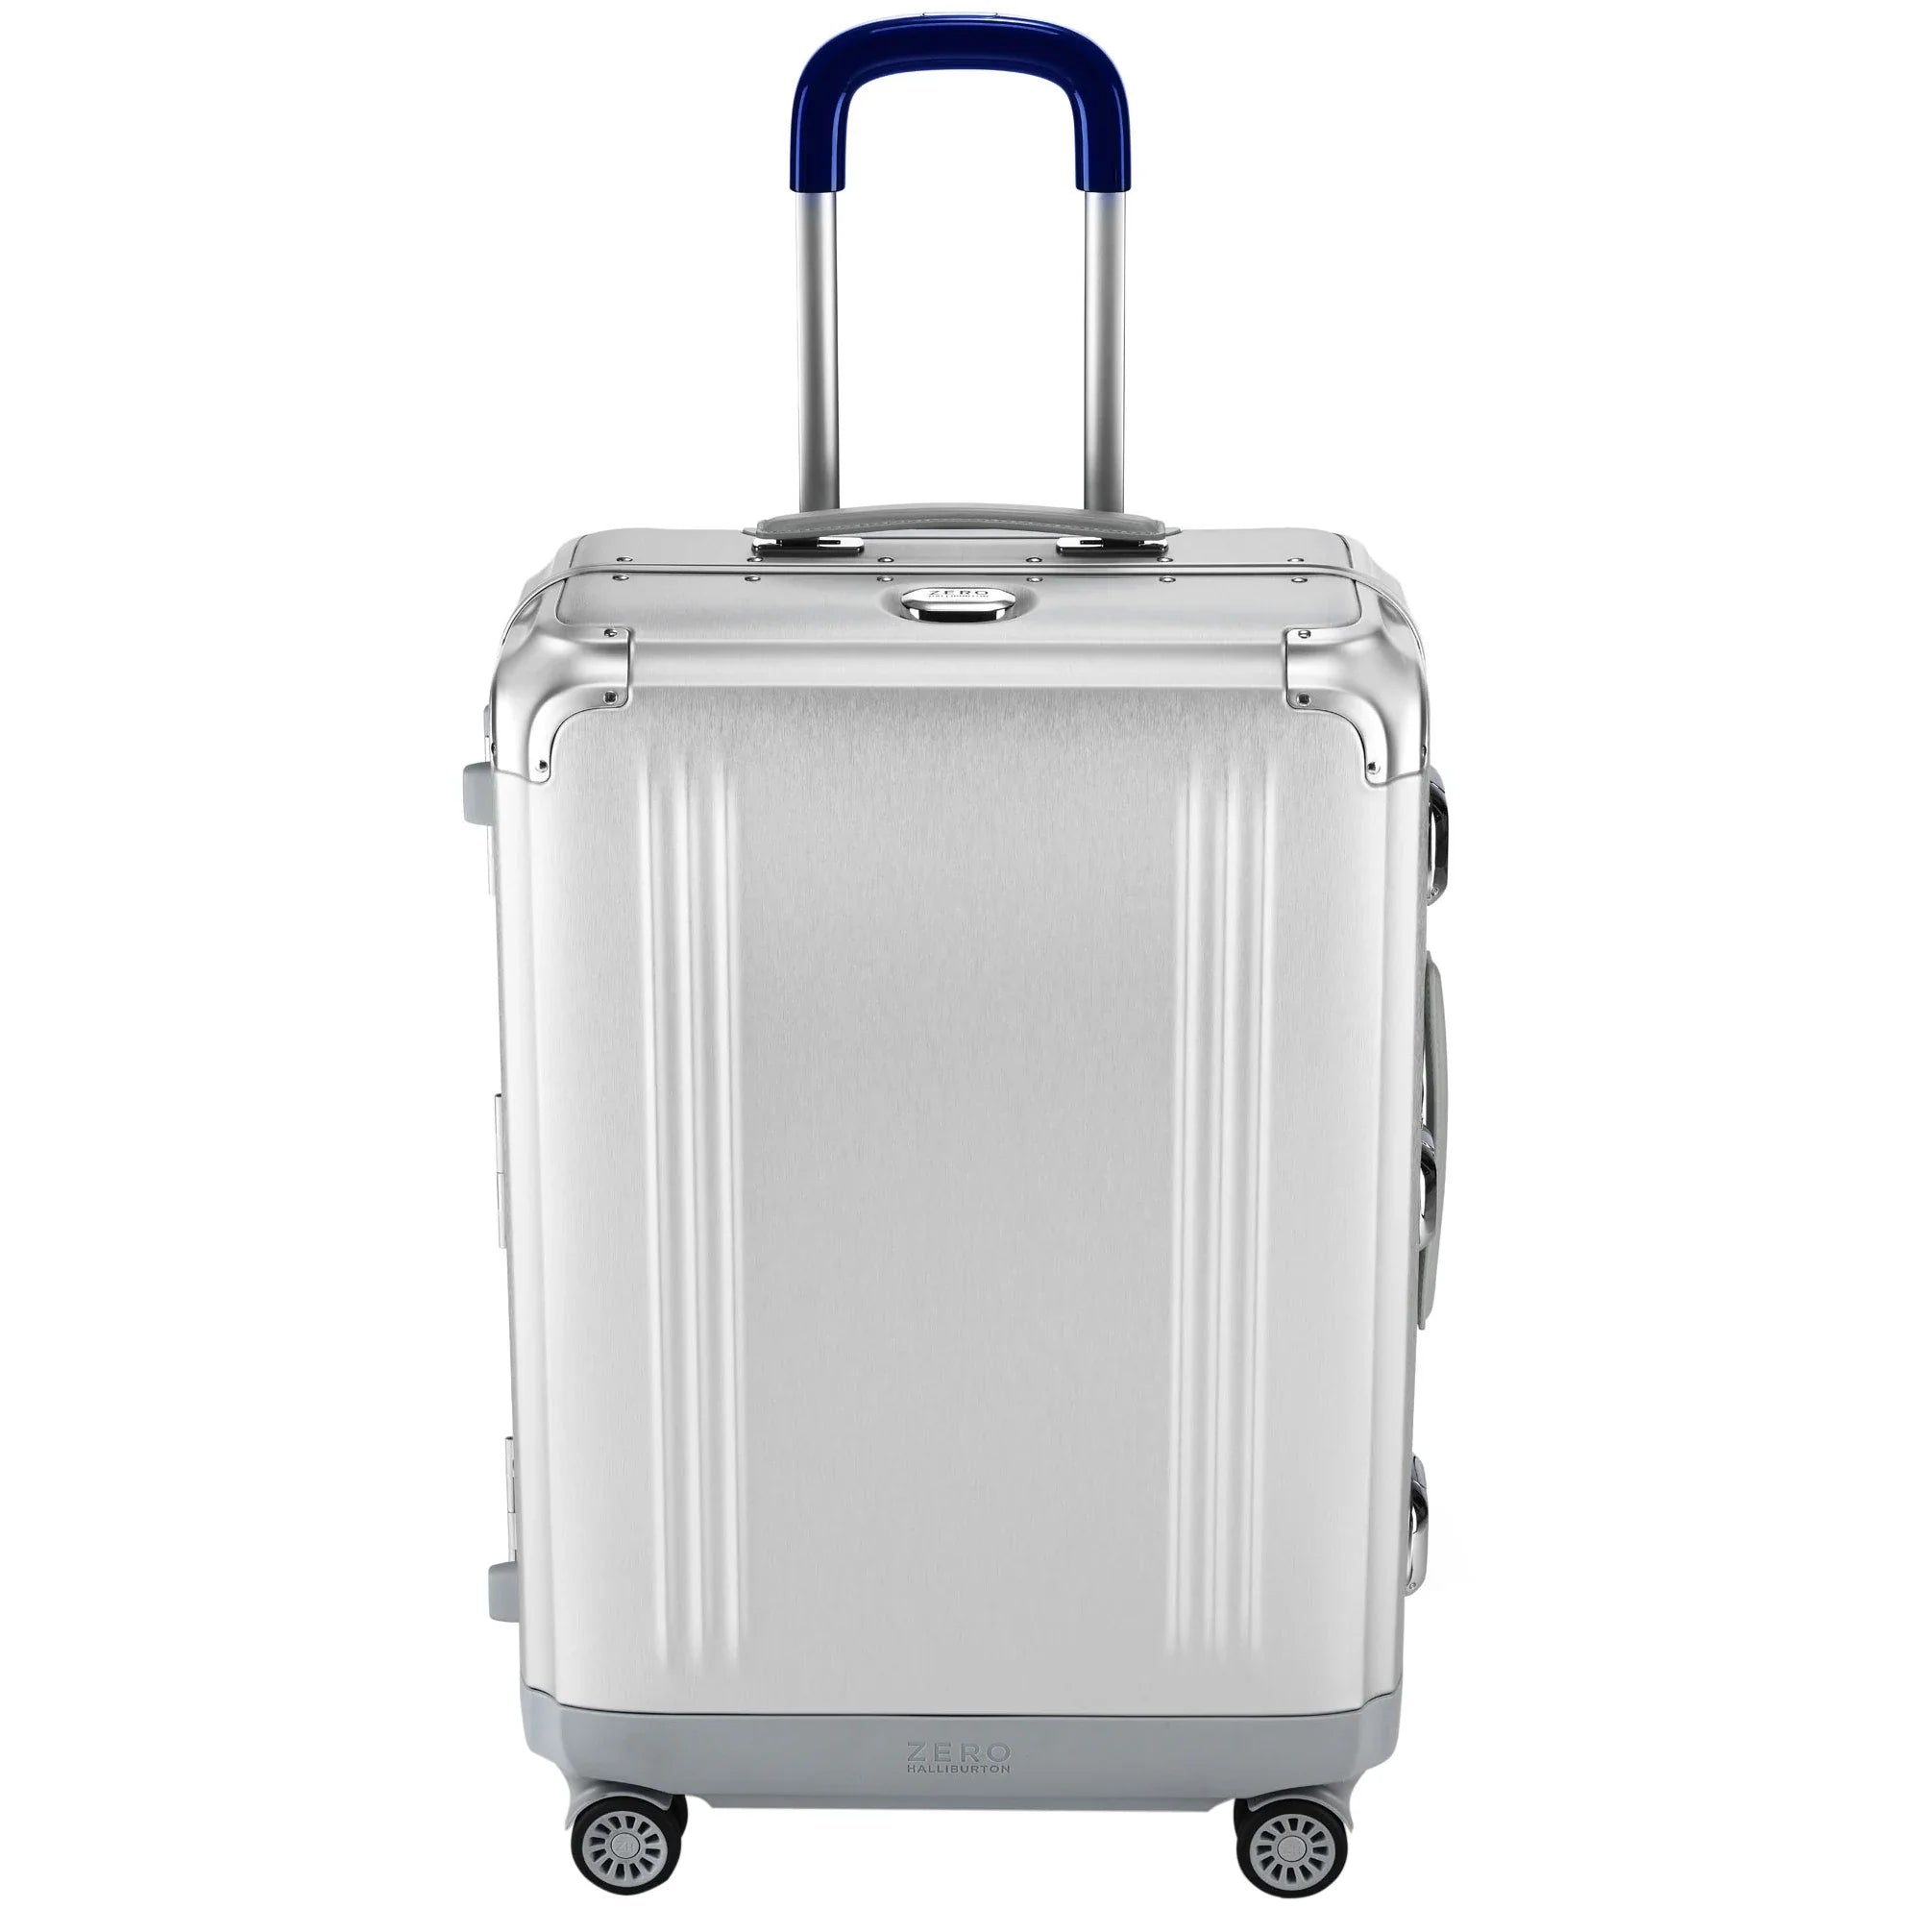 Zero Halliburton Pursuit Check In Luggage 4-wheel trolley 66 cm - Silver